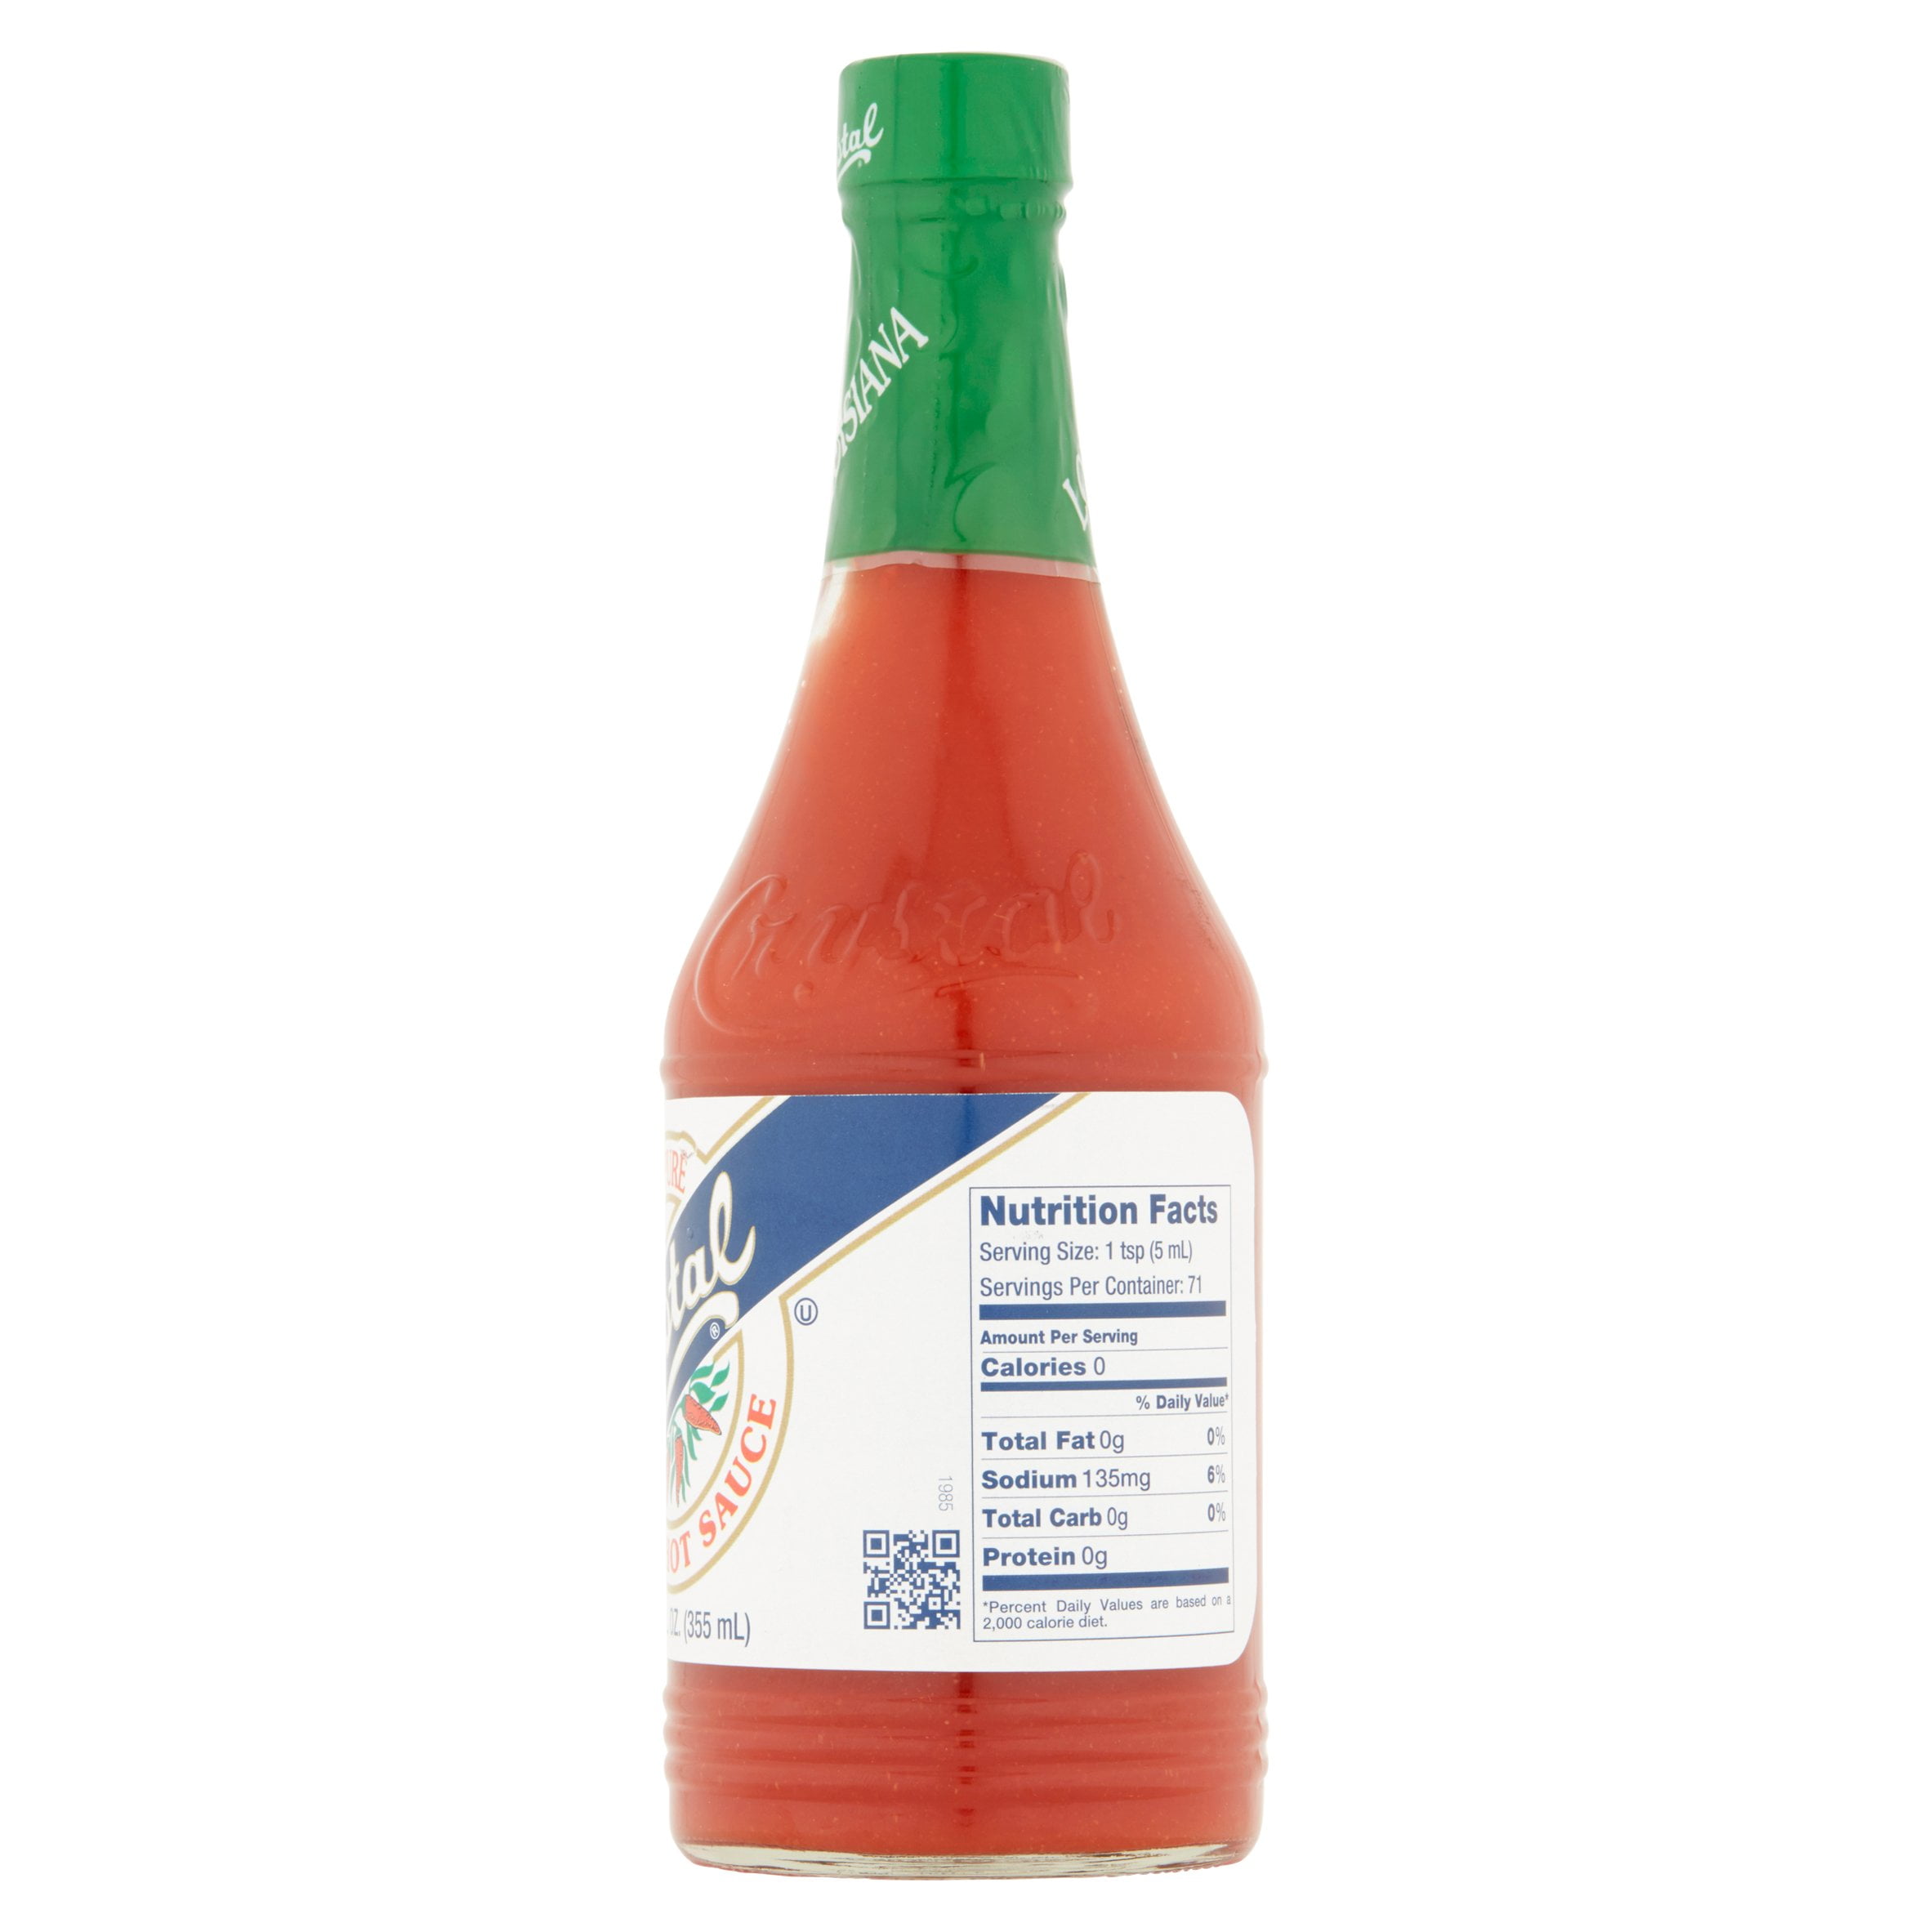 sodium hot sauce 8. - a href="https://www.walmart.com/ip/Crystal-Louis...